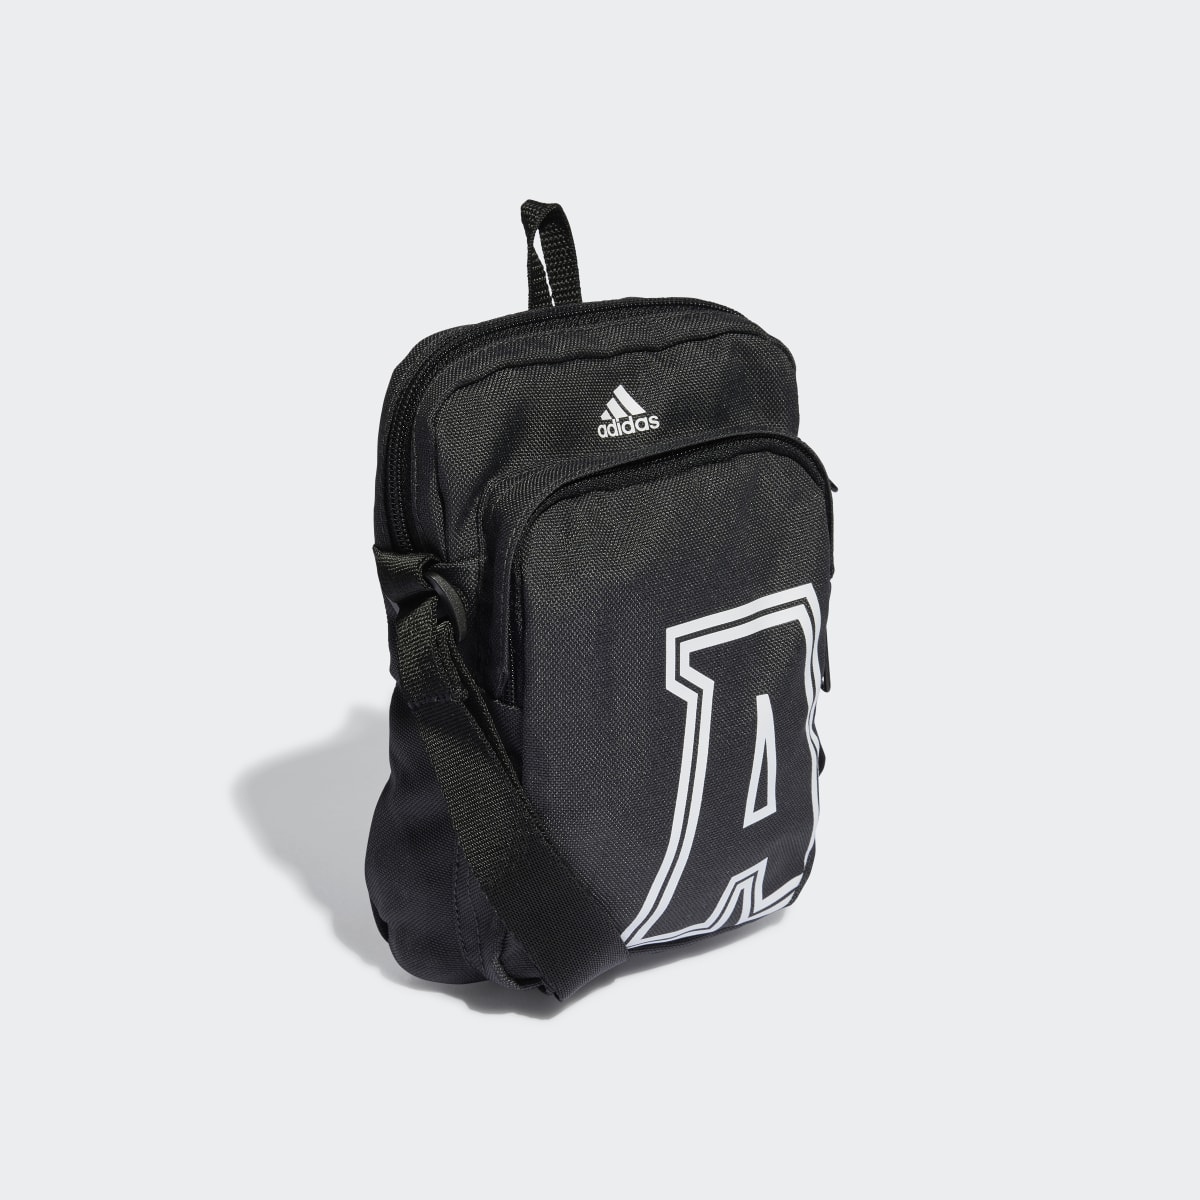 Adidas Classic Brand Love Initial Print Organizer Bag. 4